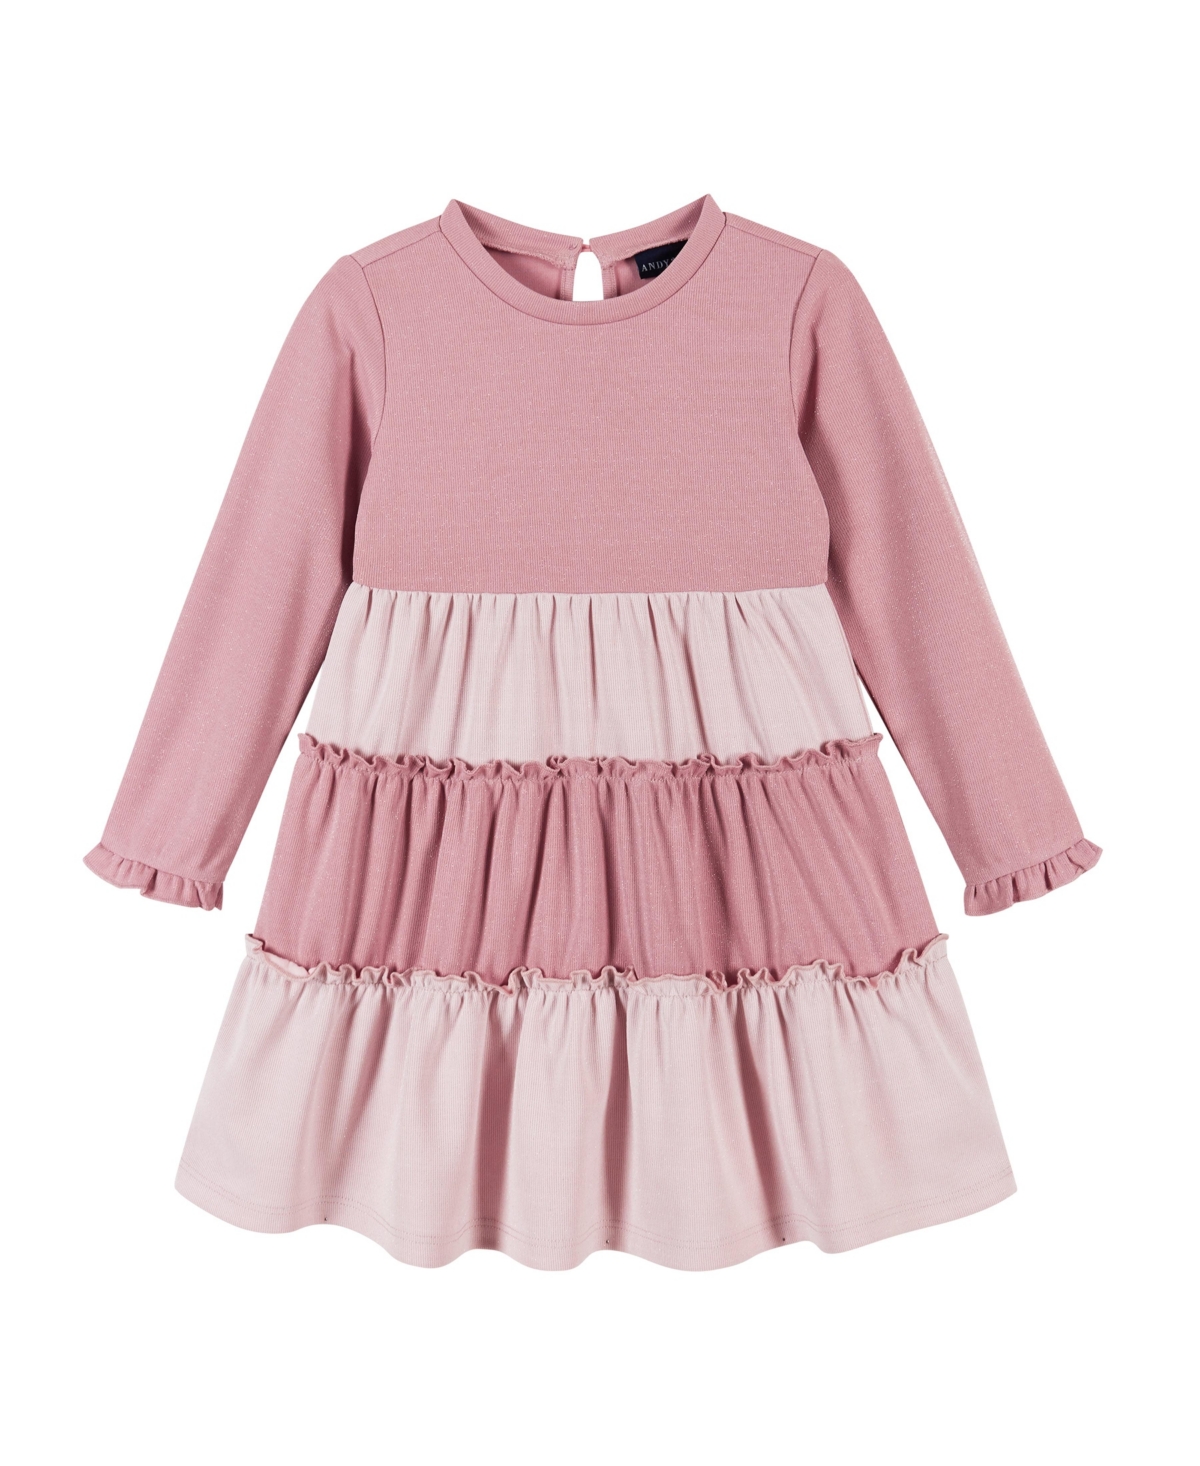 Andy & Evan Toddler/child Girls Pullover Knit Dress W/lurex In Bright Pink